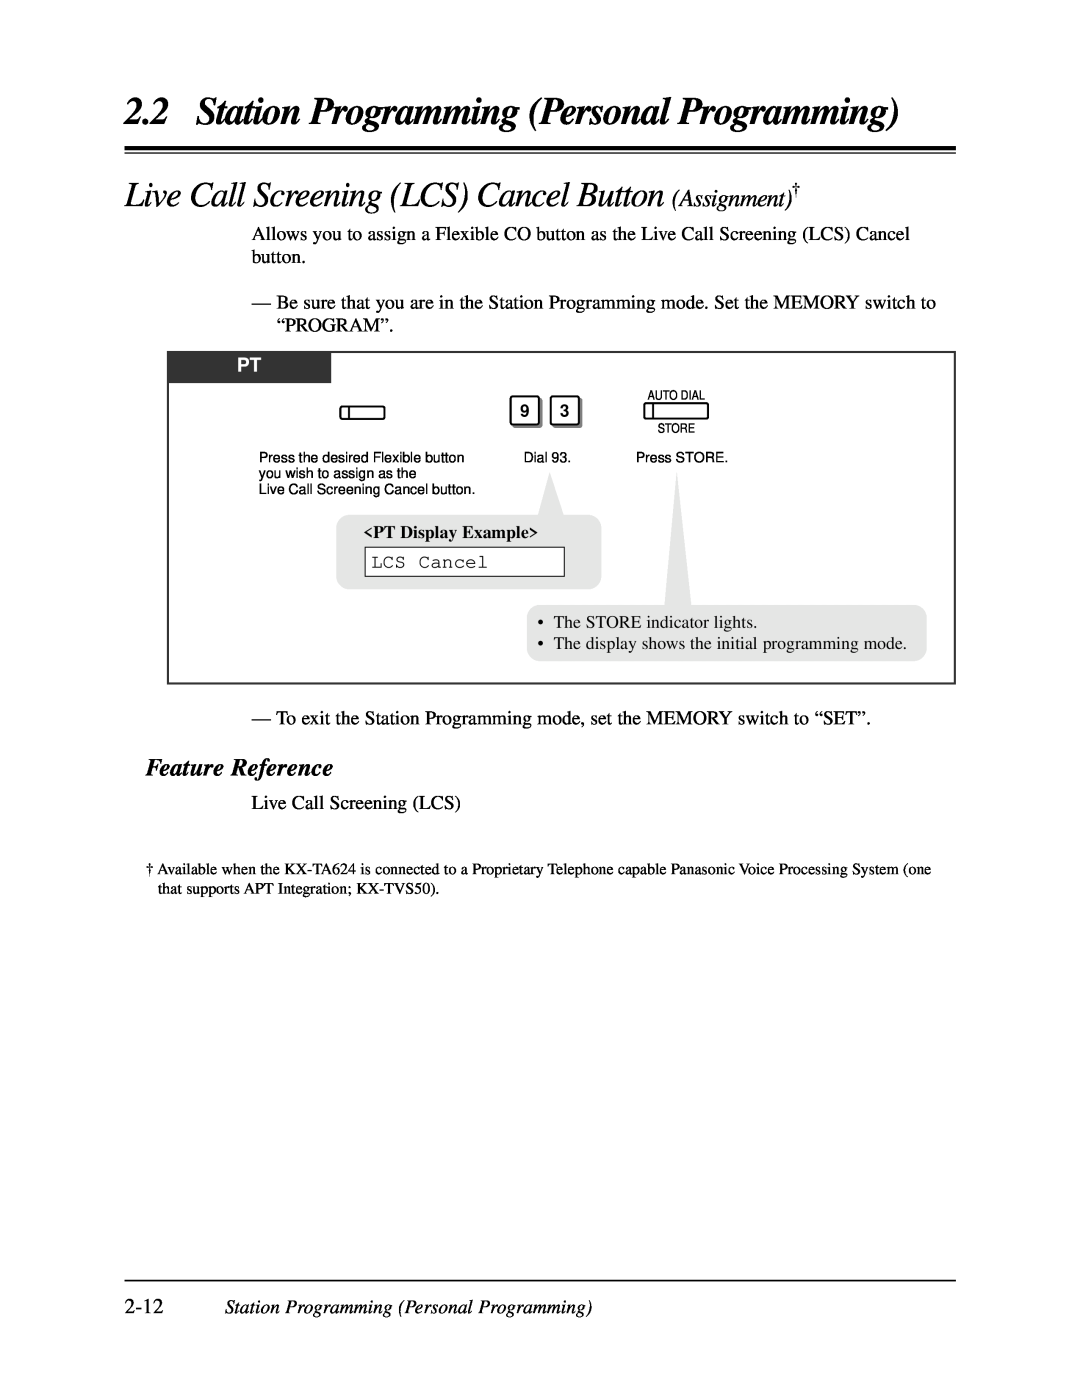 Panasonic KX-TA624 user manual Live Call Screening LCS Cancel Button Assignment†, Station Programming Personal Programming 